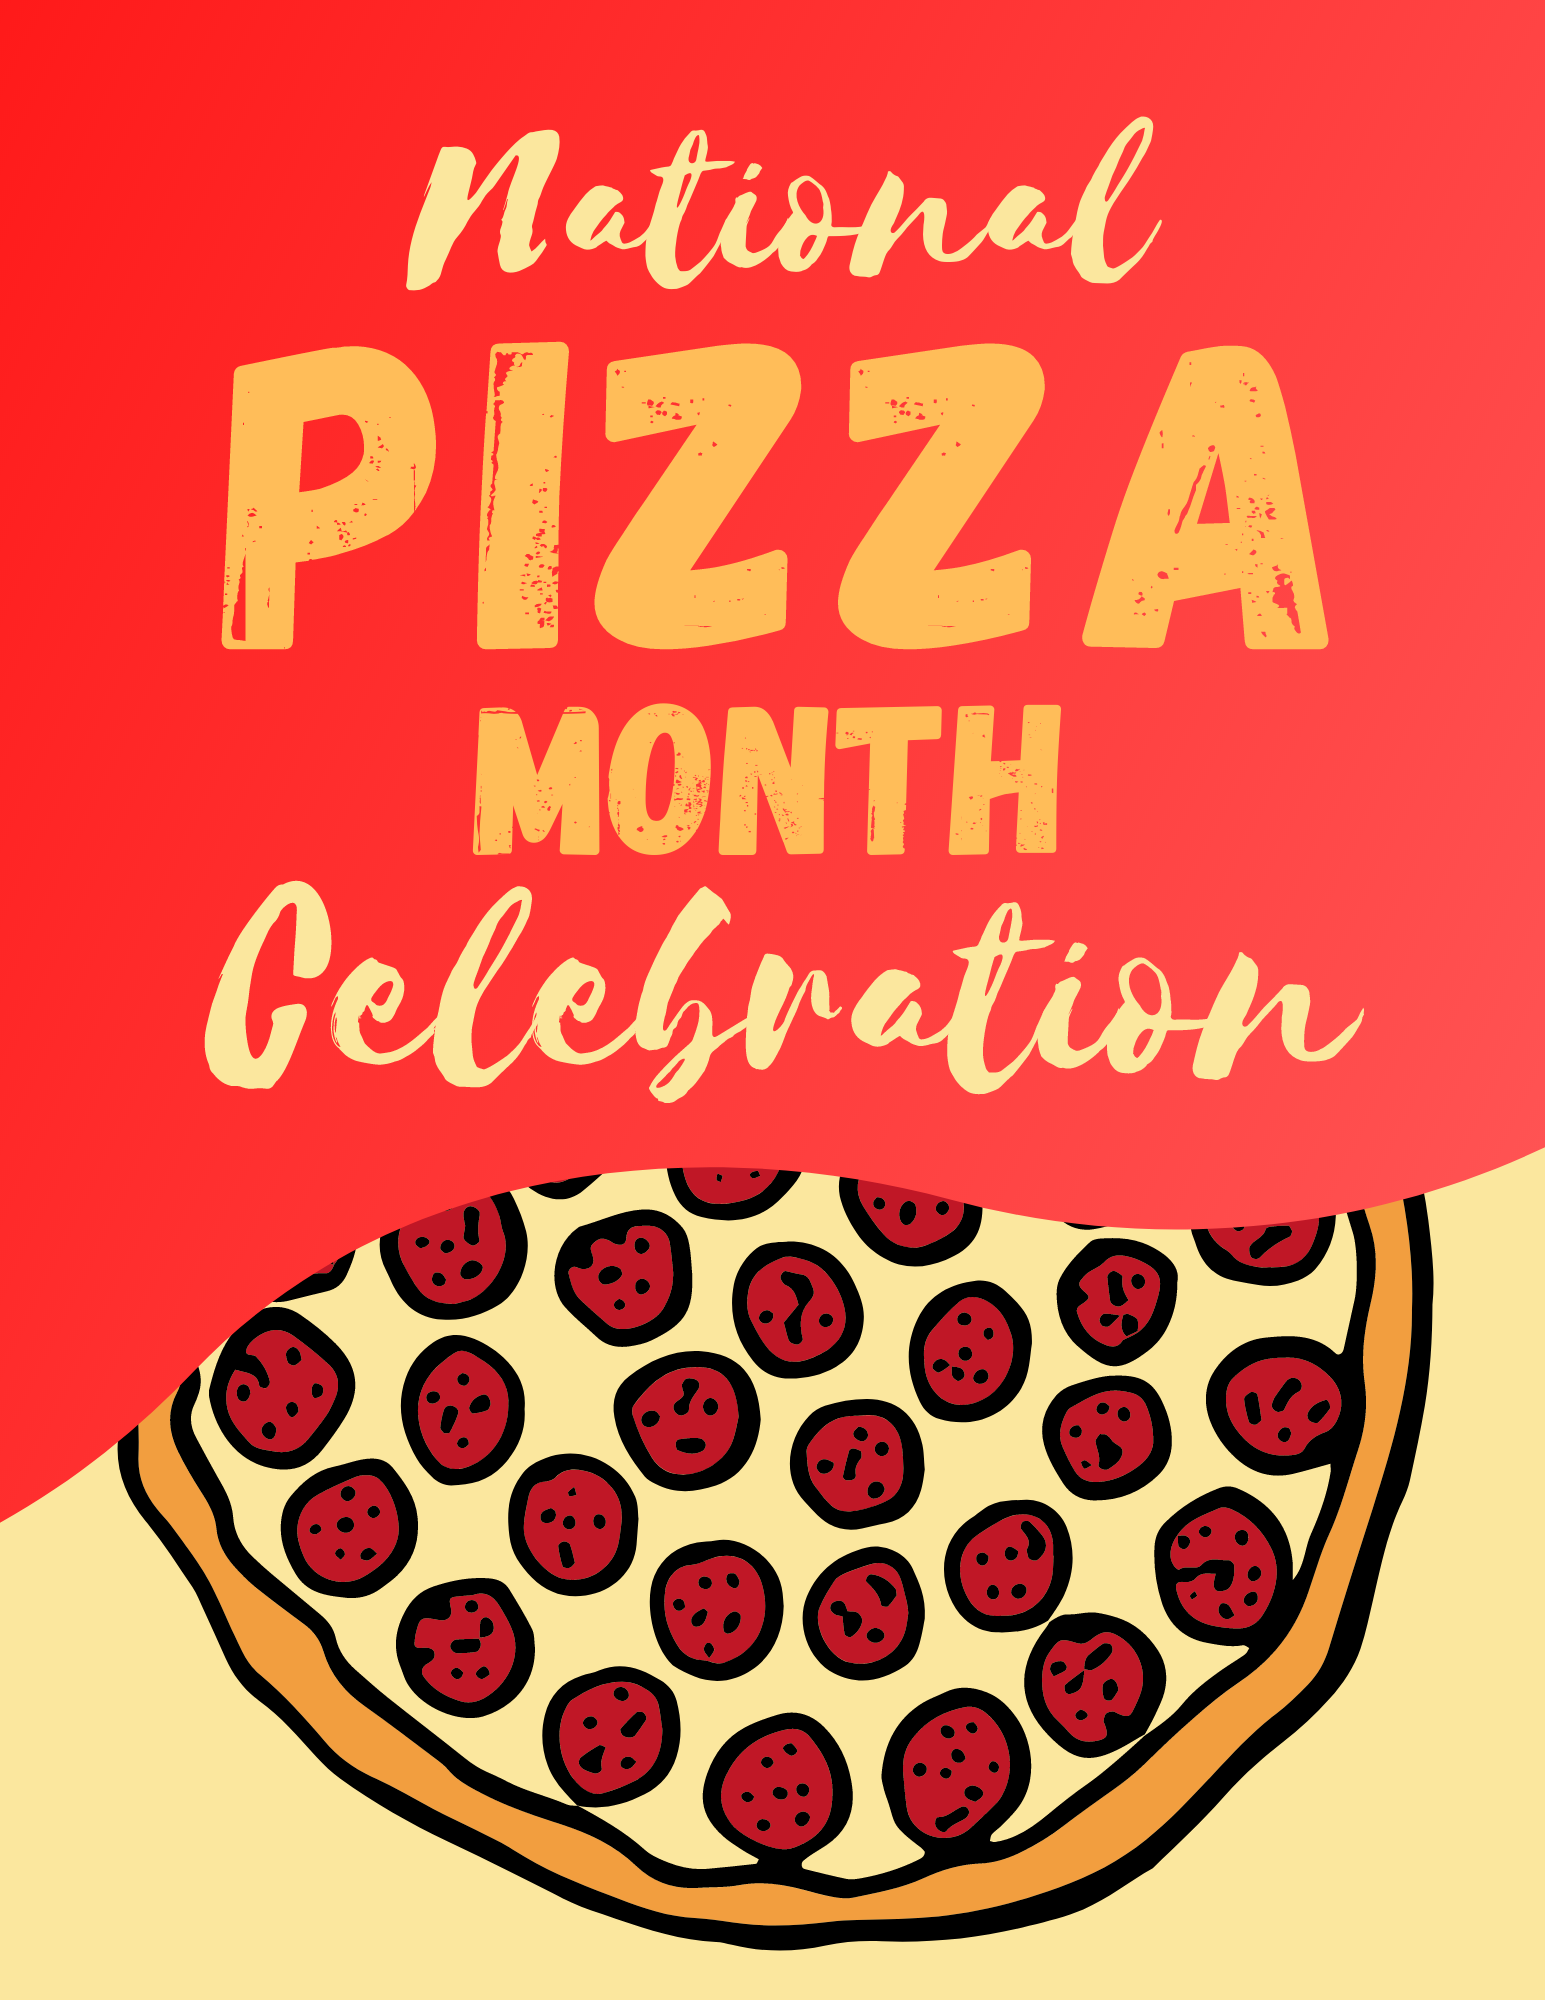 National Pizza Month Celebration